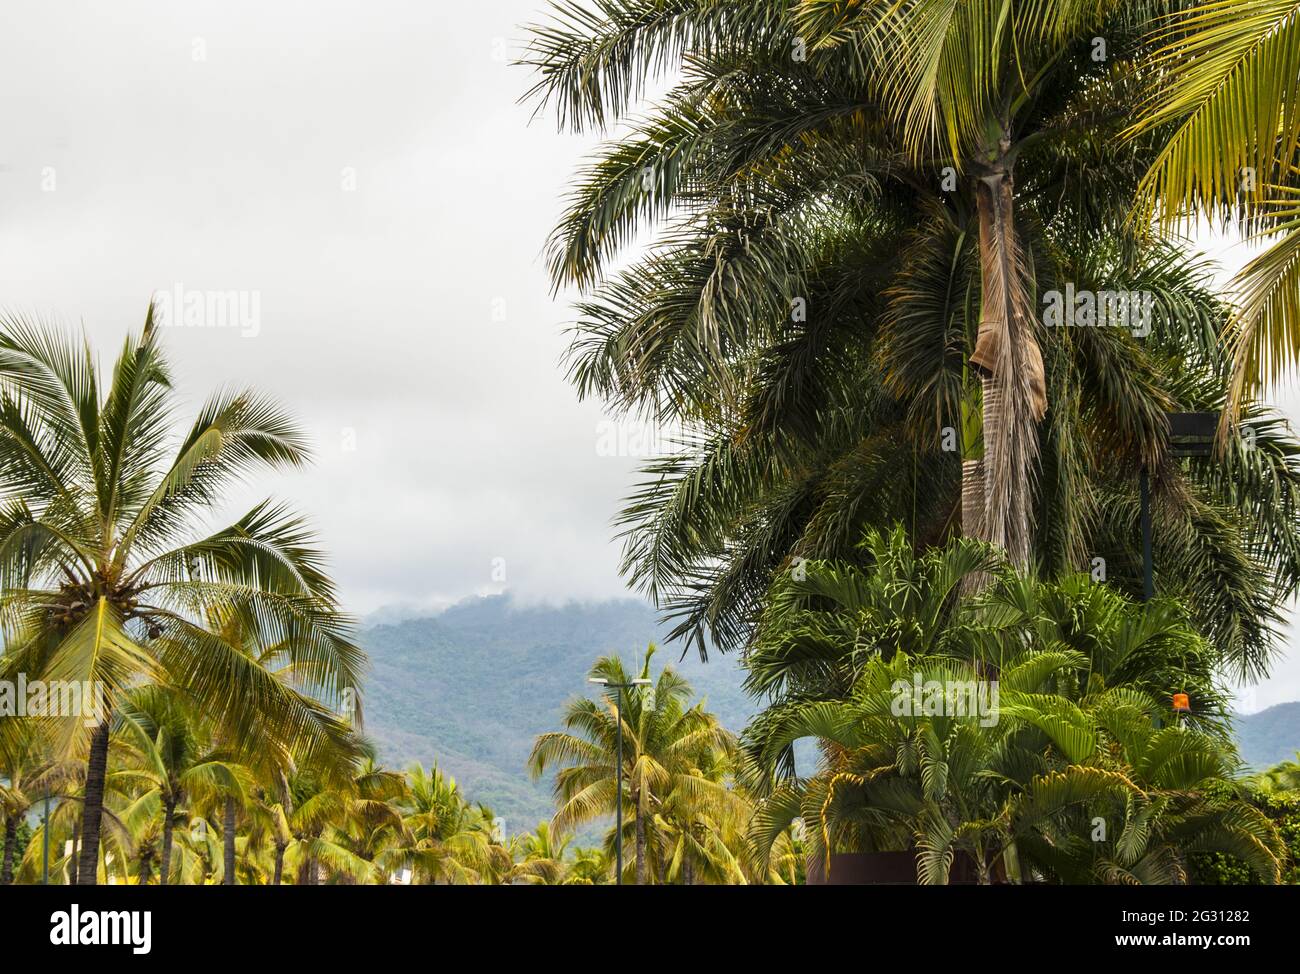 Palms along the Boulevard Francisco Medina Ascencio with view of the jungle-clad Sierra Madre mountains - Puerto Vallarta, Jalisco, Mexico. #613PV Stock Photo